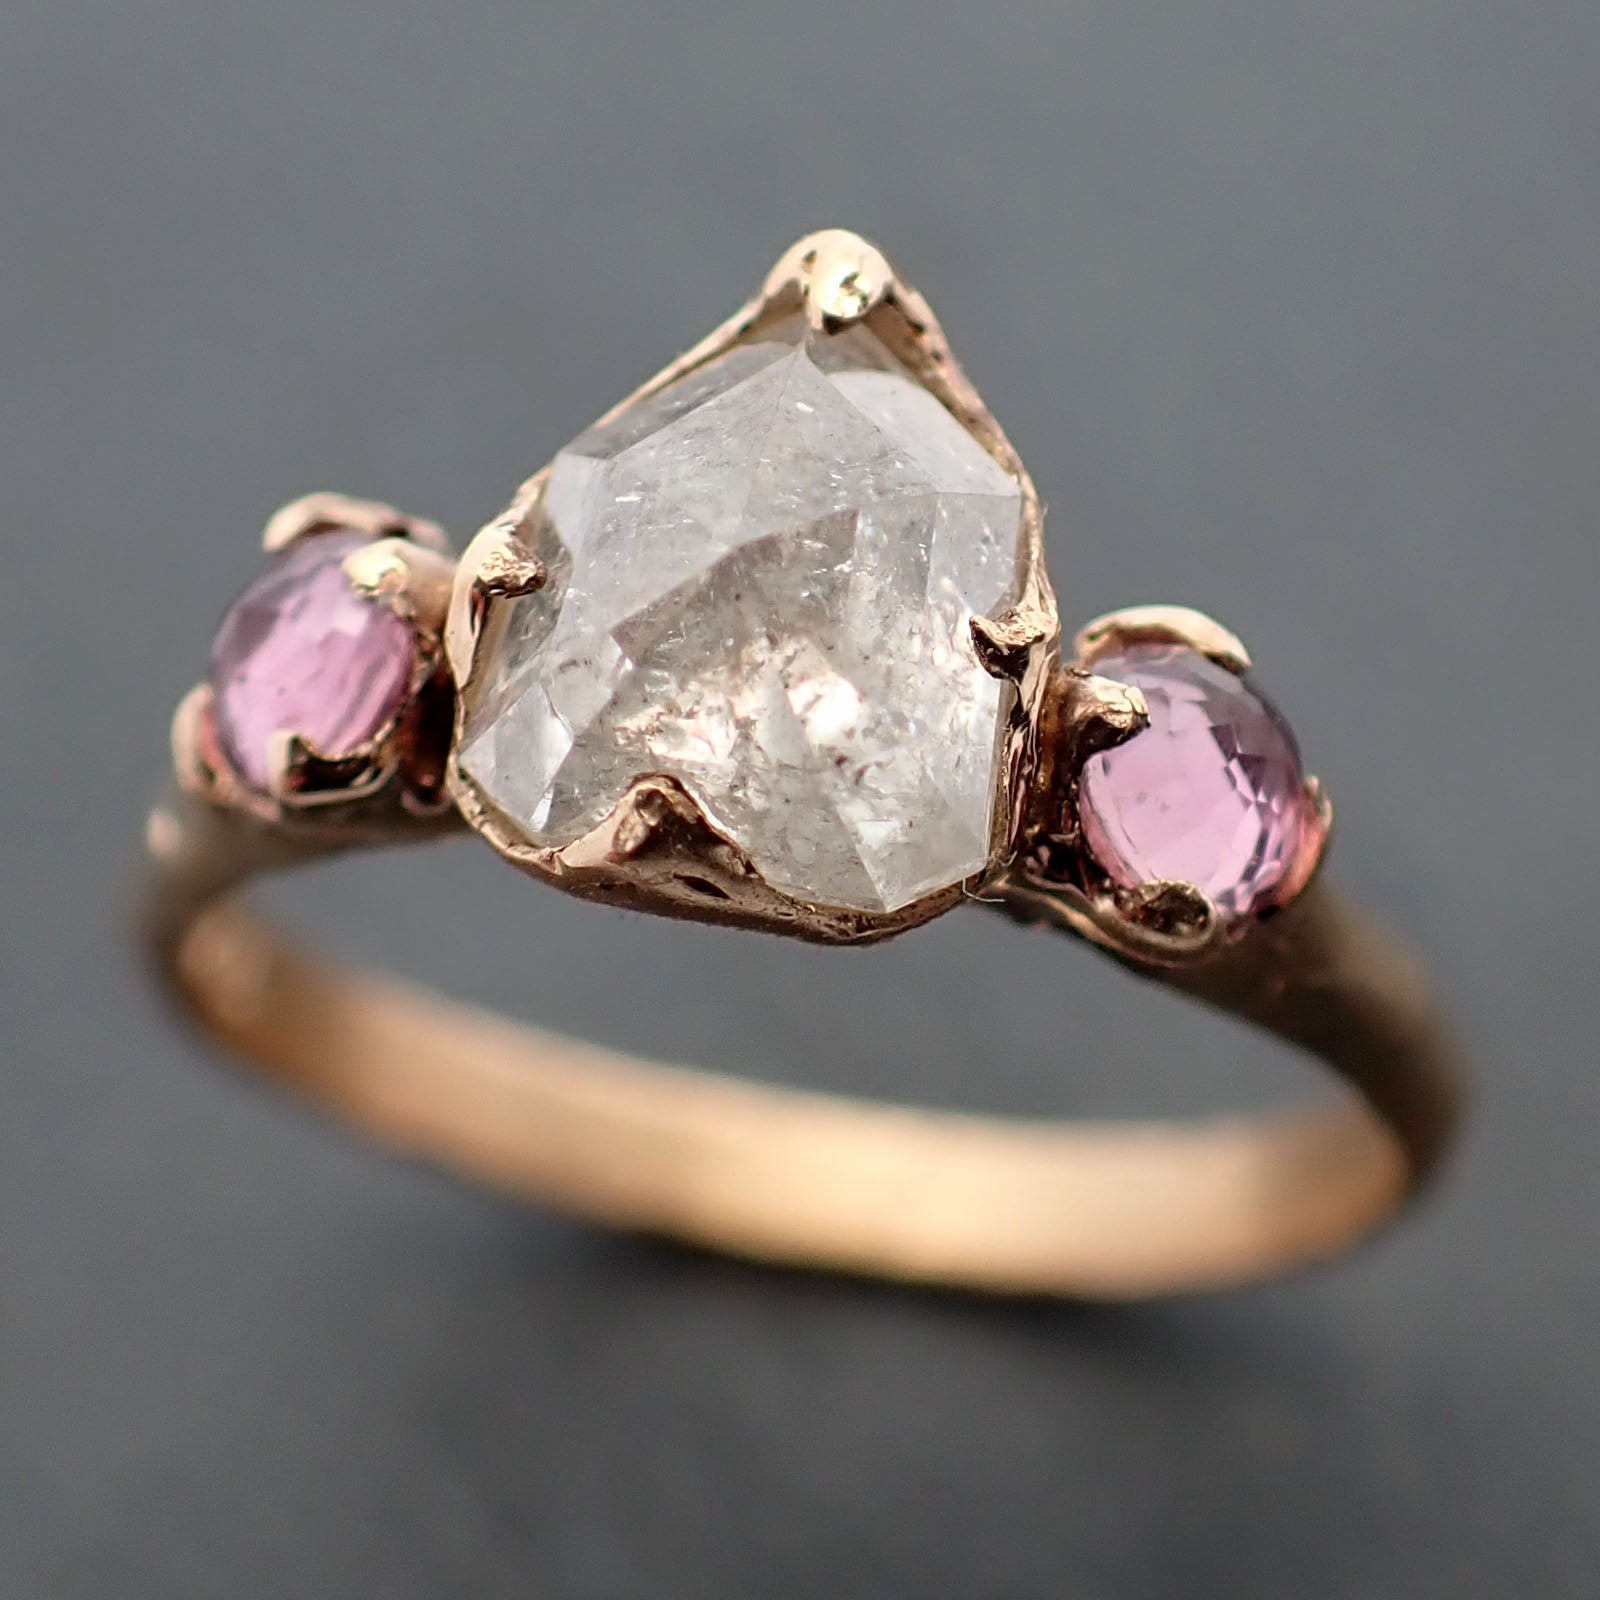 Fancy cut white Diamond and Rubies Engagement multi stone 18k yellow Gold Wedding Ring Rough Diamond Ring byAngeline 3345